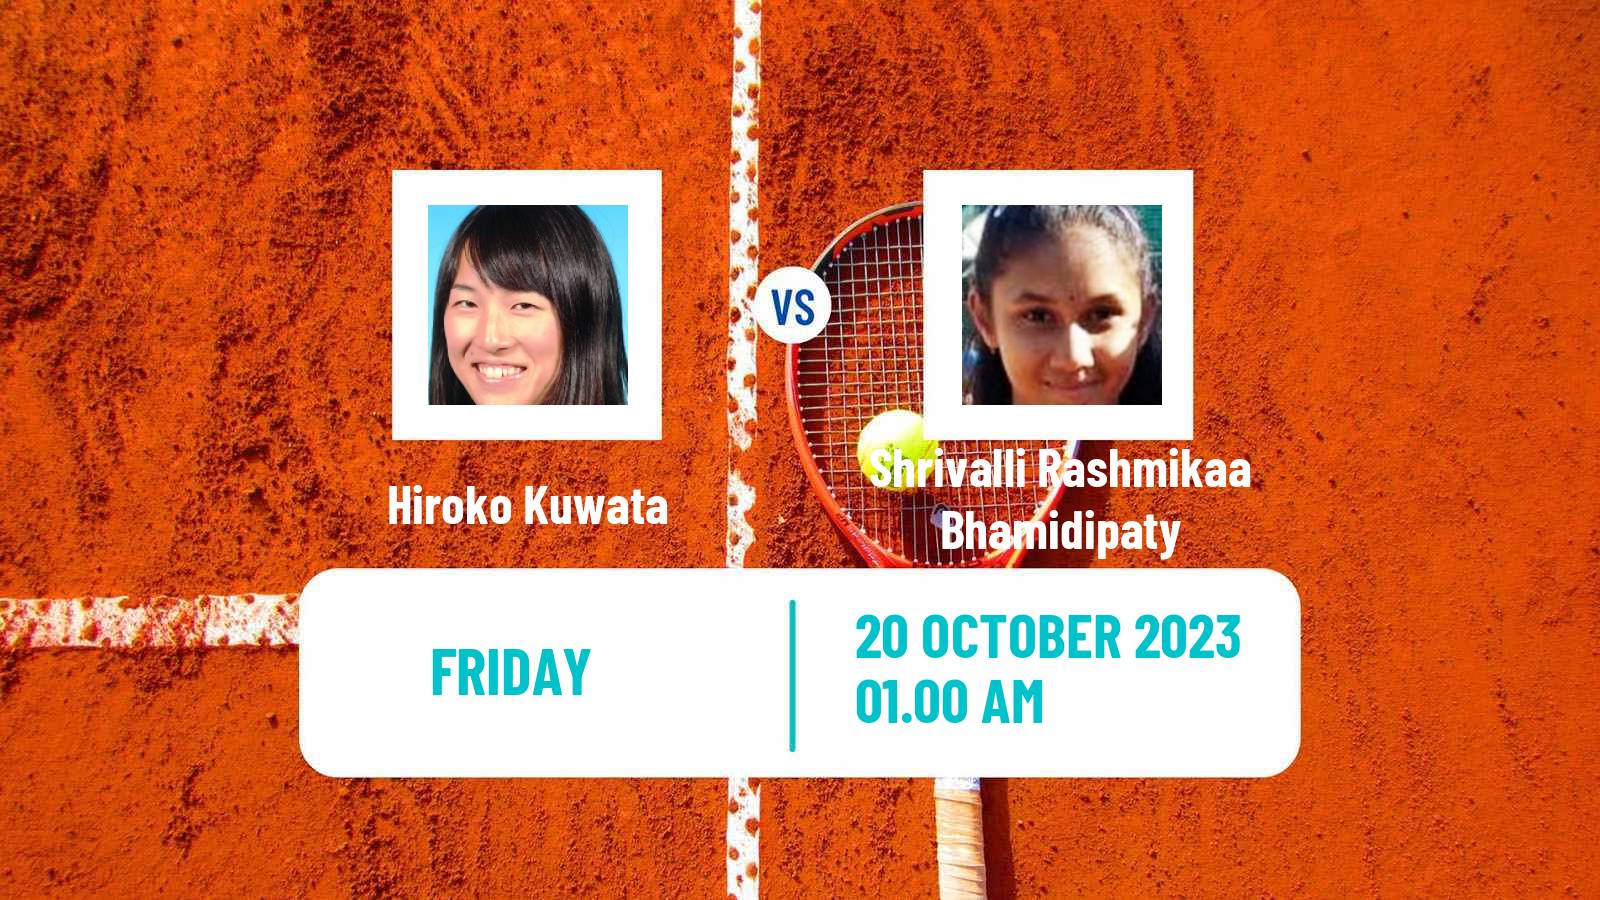 Tennis ITF W15 Hua Hin 2 Women Hiroko Kuwata - Shrivalli Rashmikaa Bhamidipaty